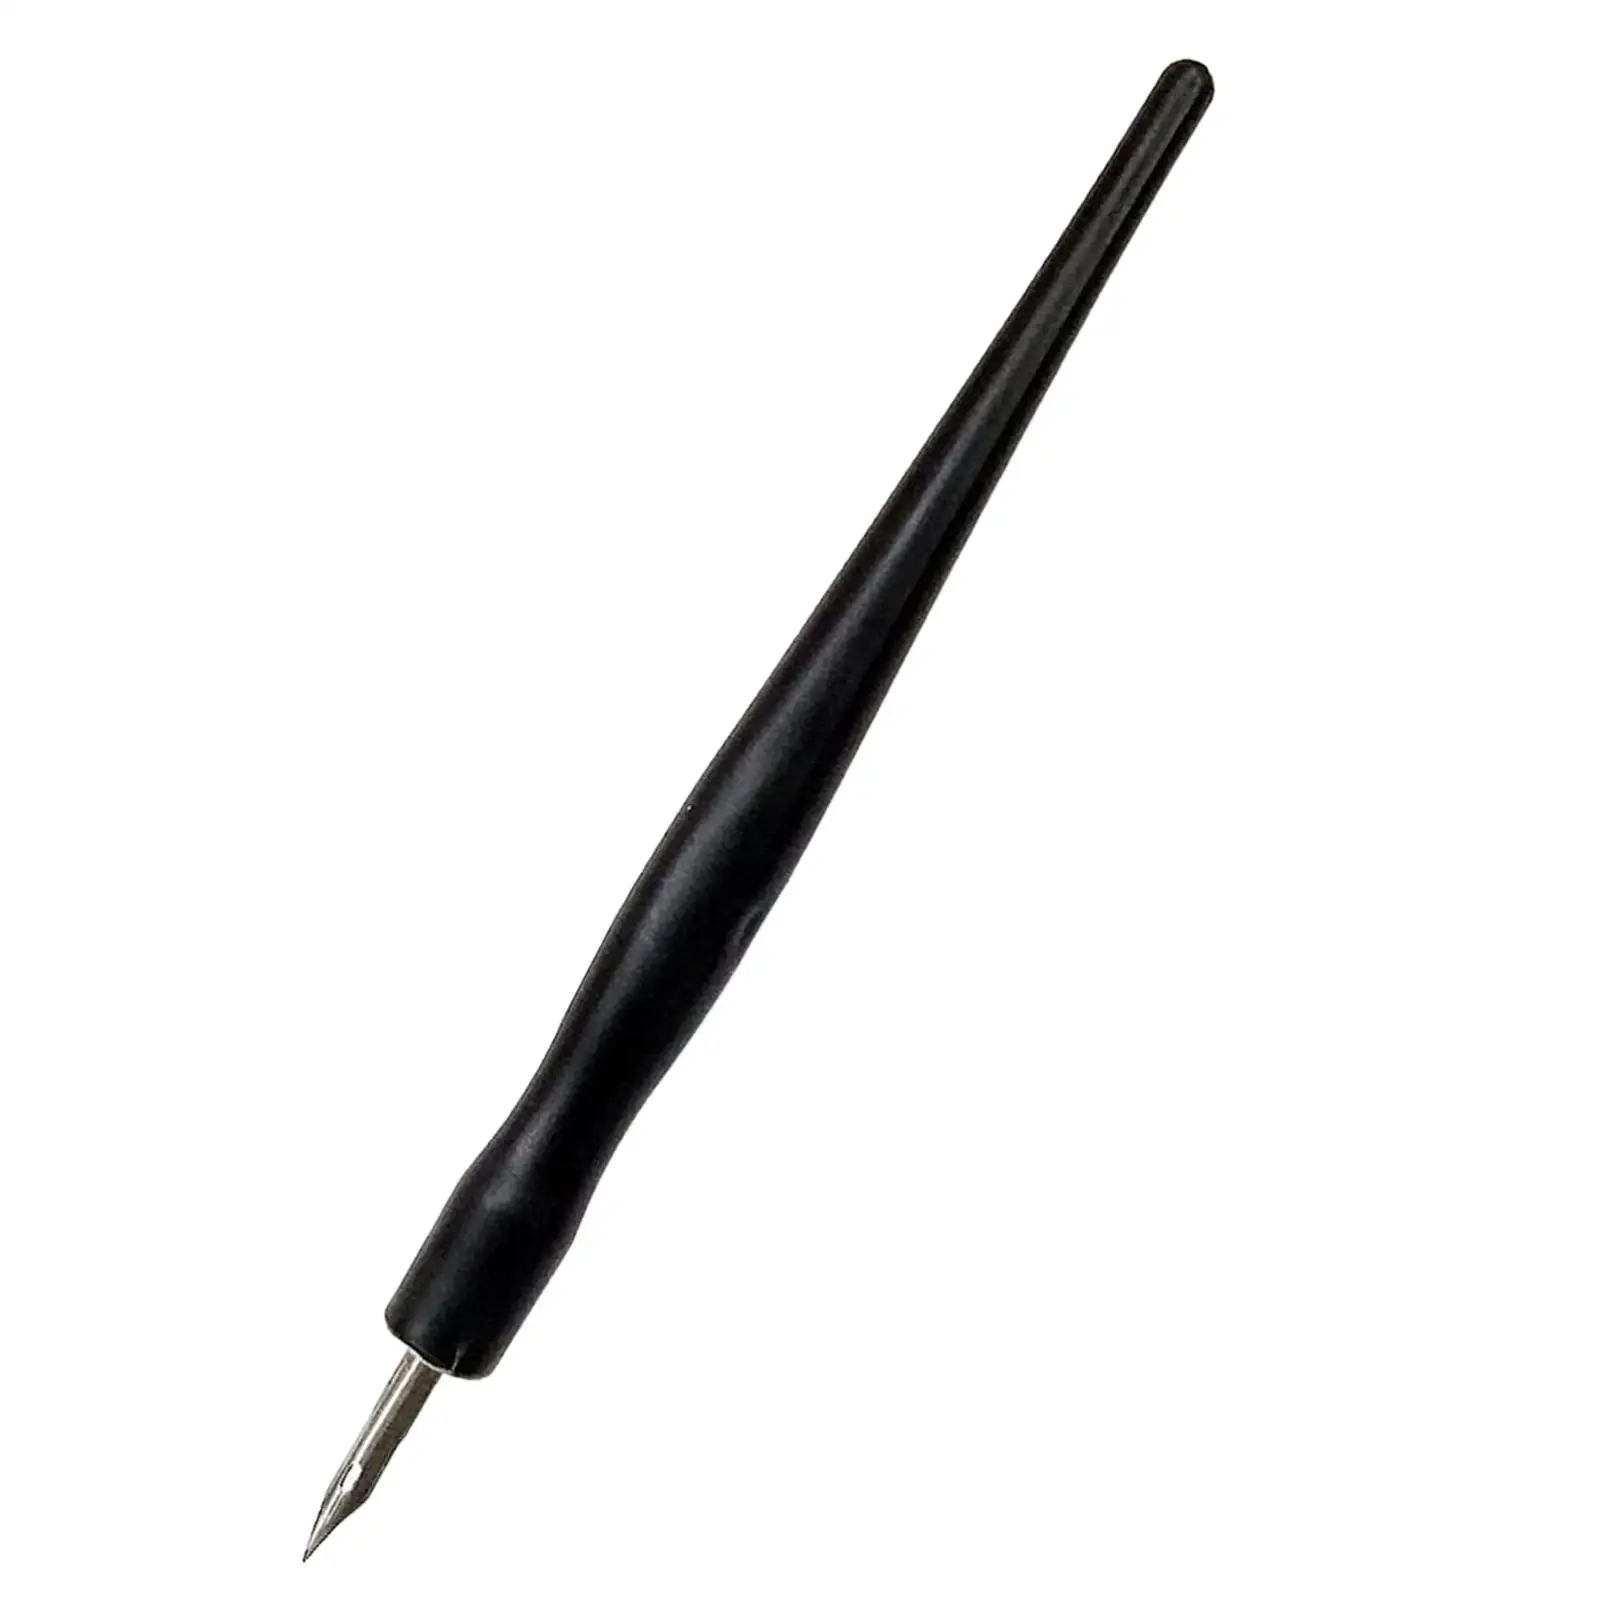 Panel Line Accent Pen Permeation Pen Leaking Pen Avoid Scrubbing Tool Hobby